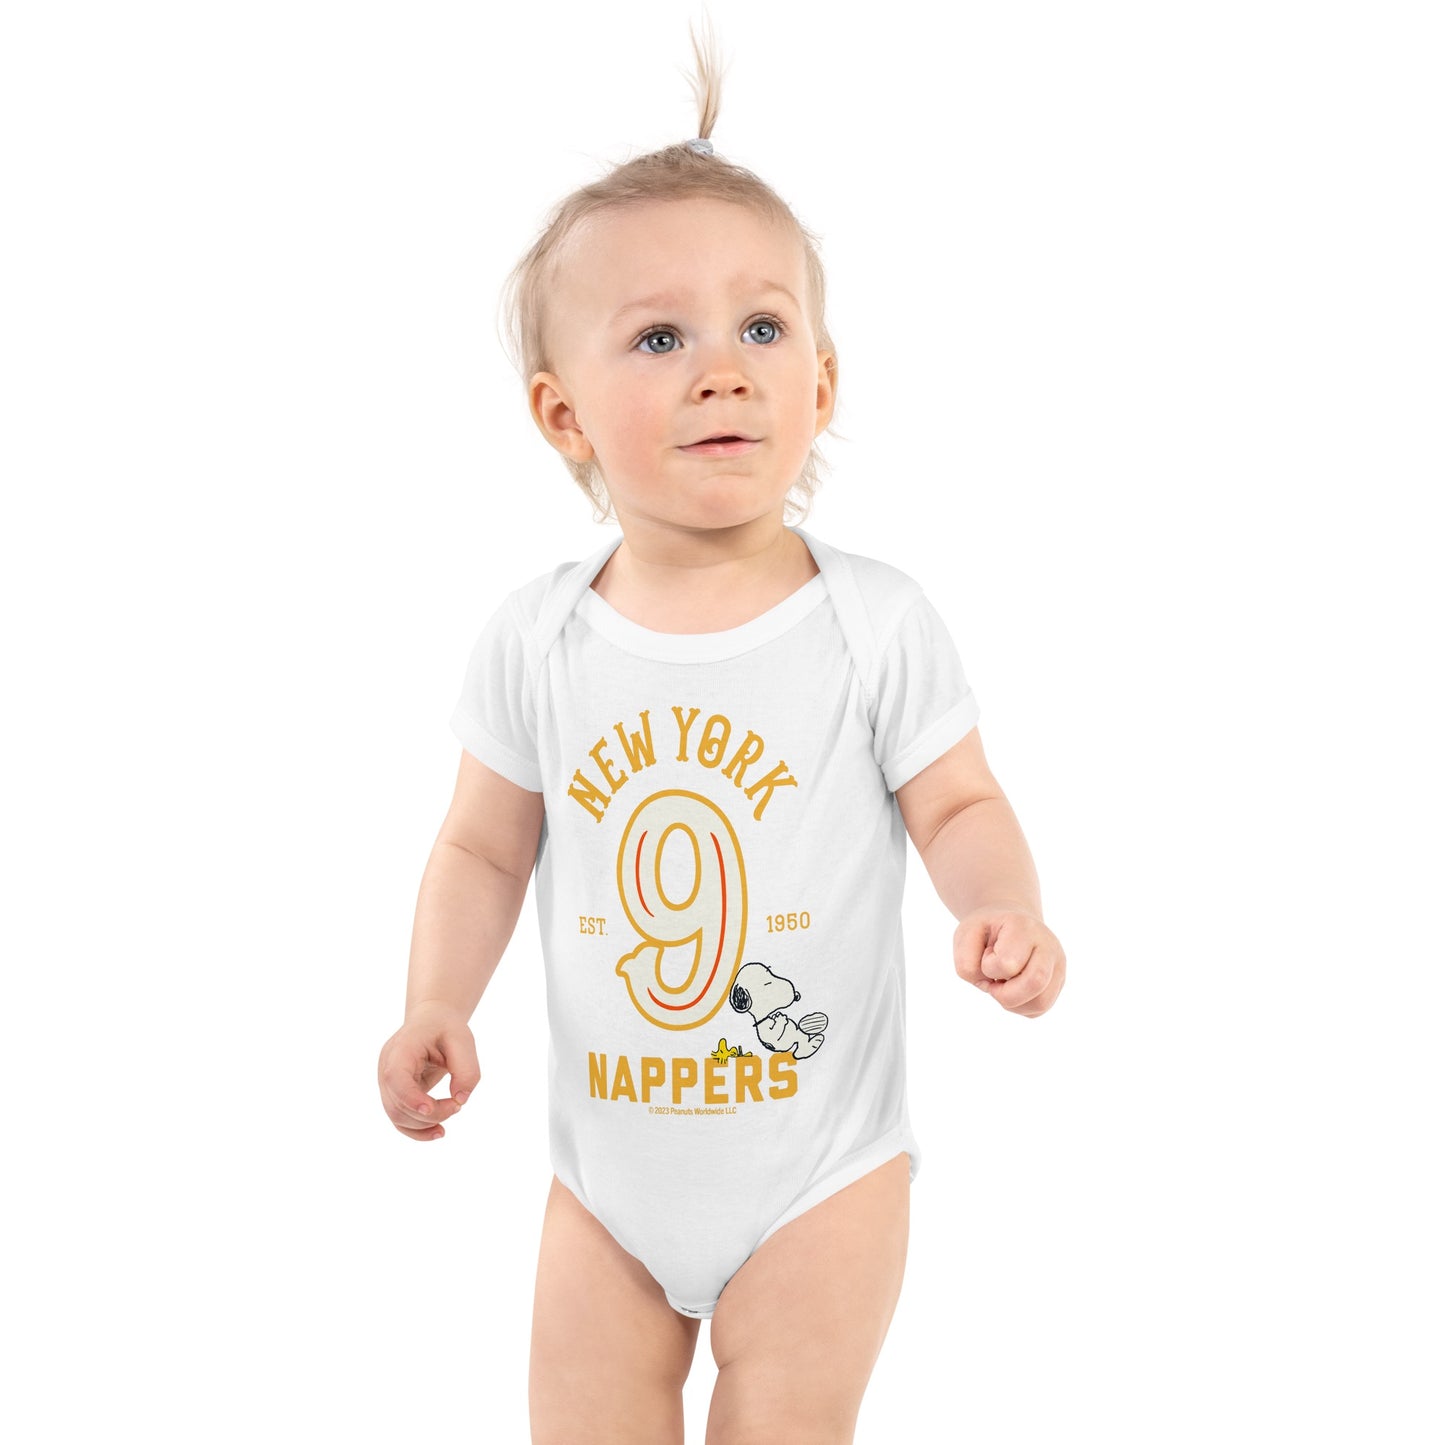 New York Nappers Baby Bodysuit